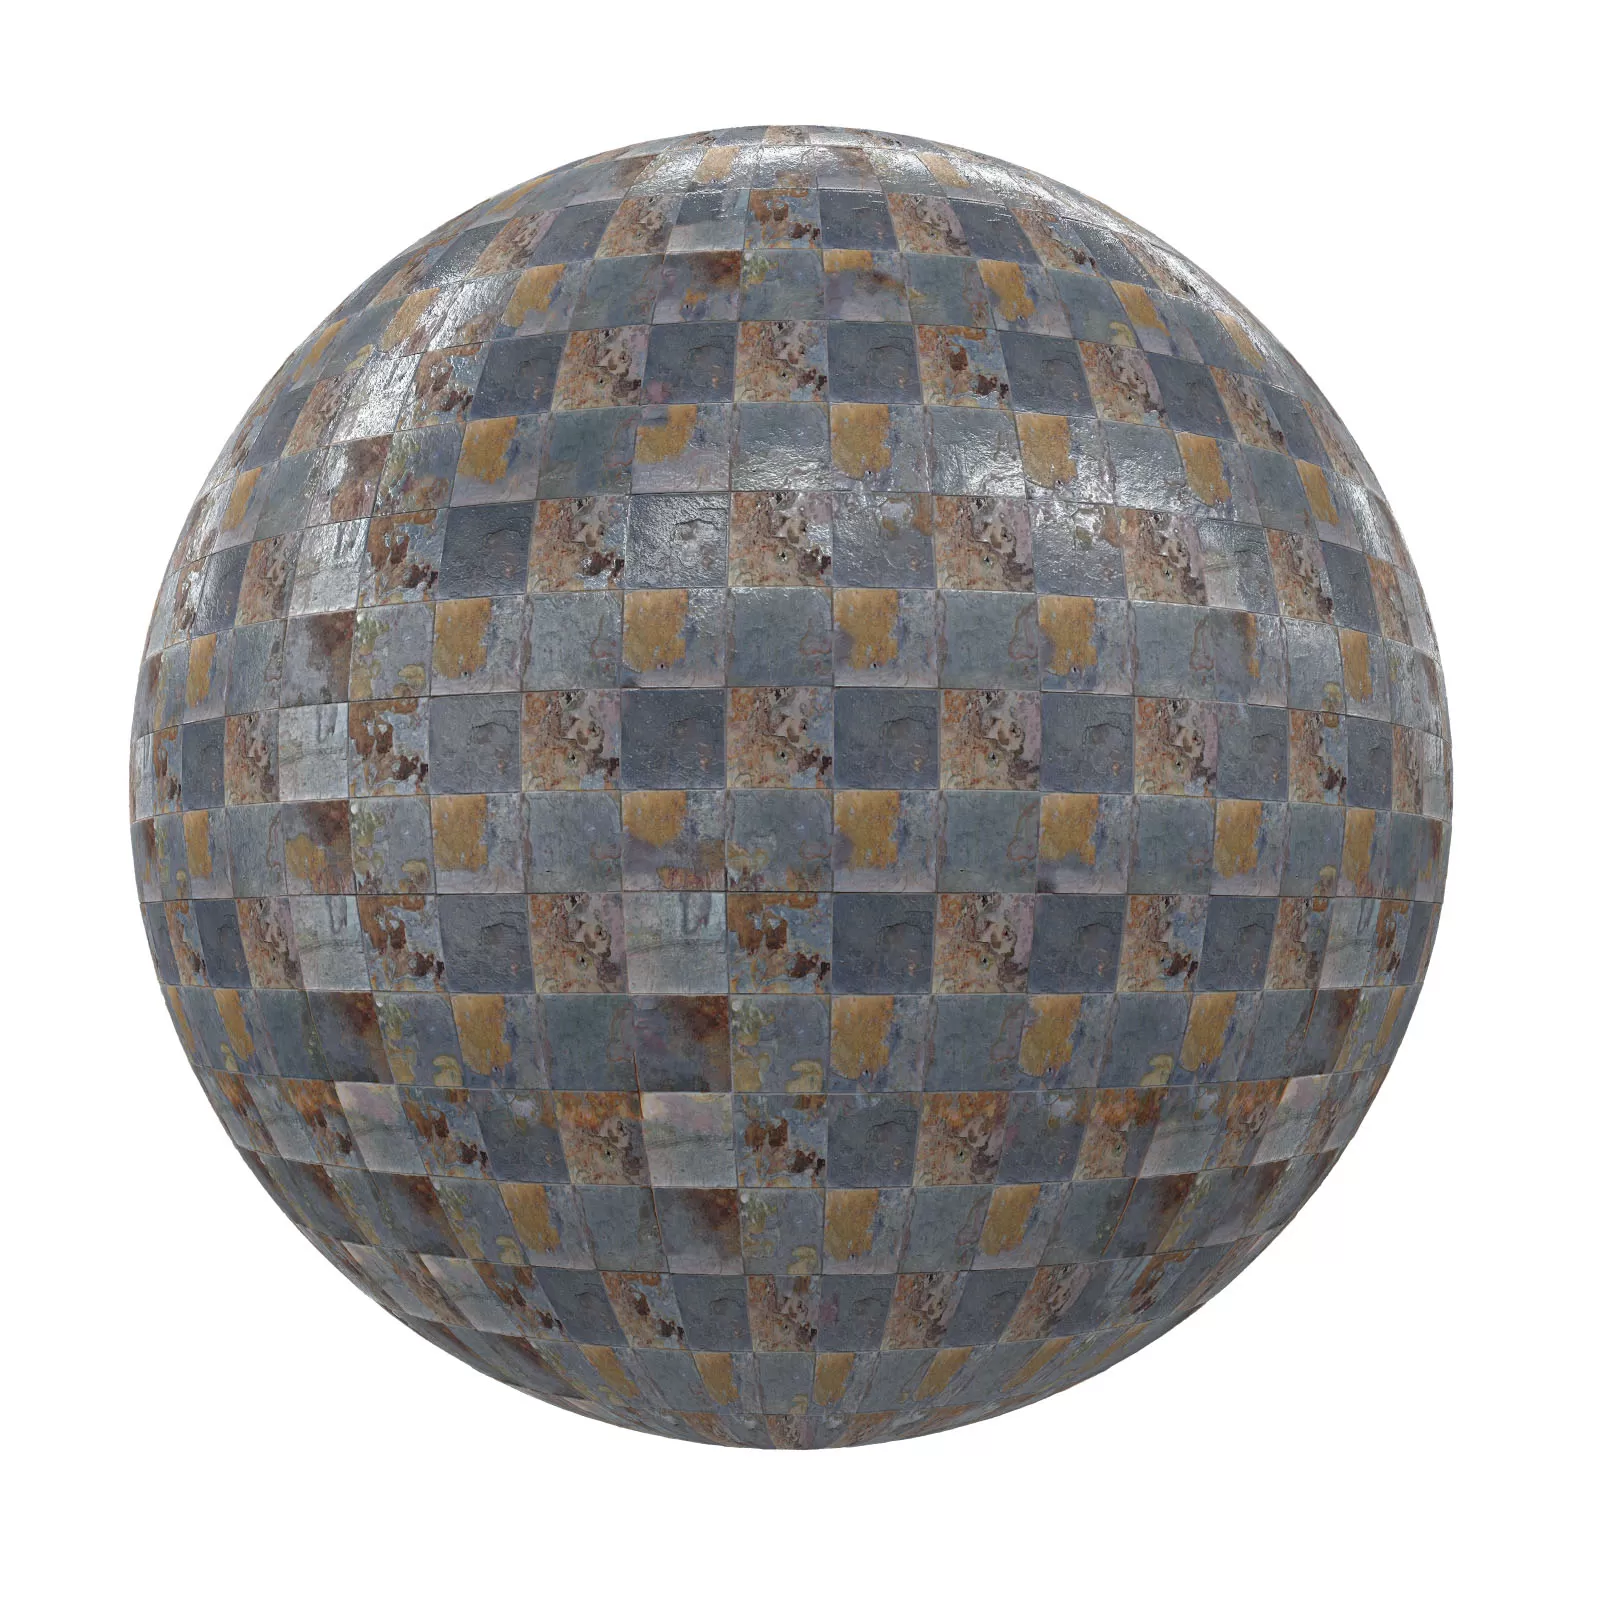 PBR CGAXIS TEXTURES – TILES – Old Metalic Tiles 1